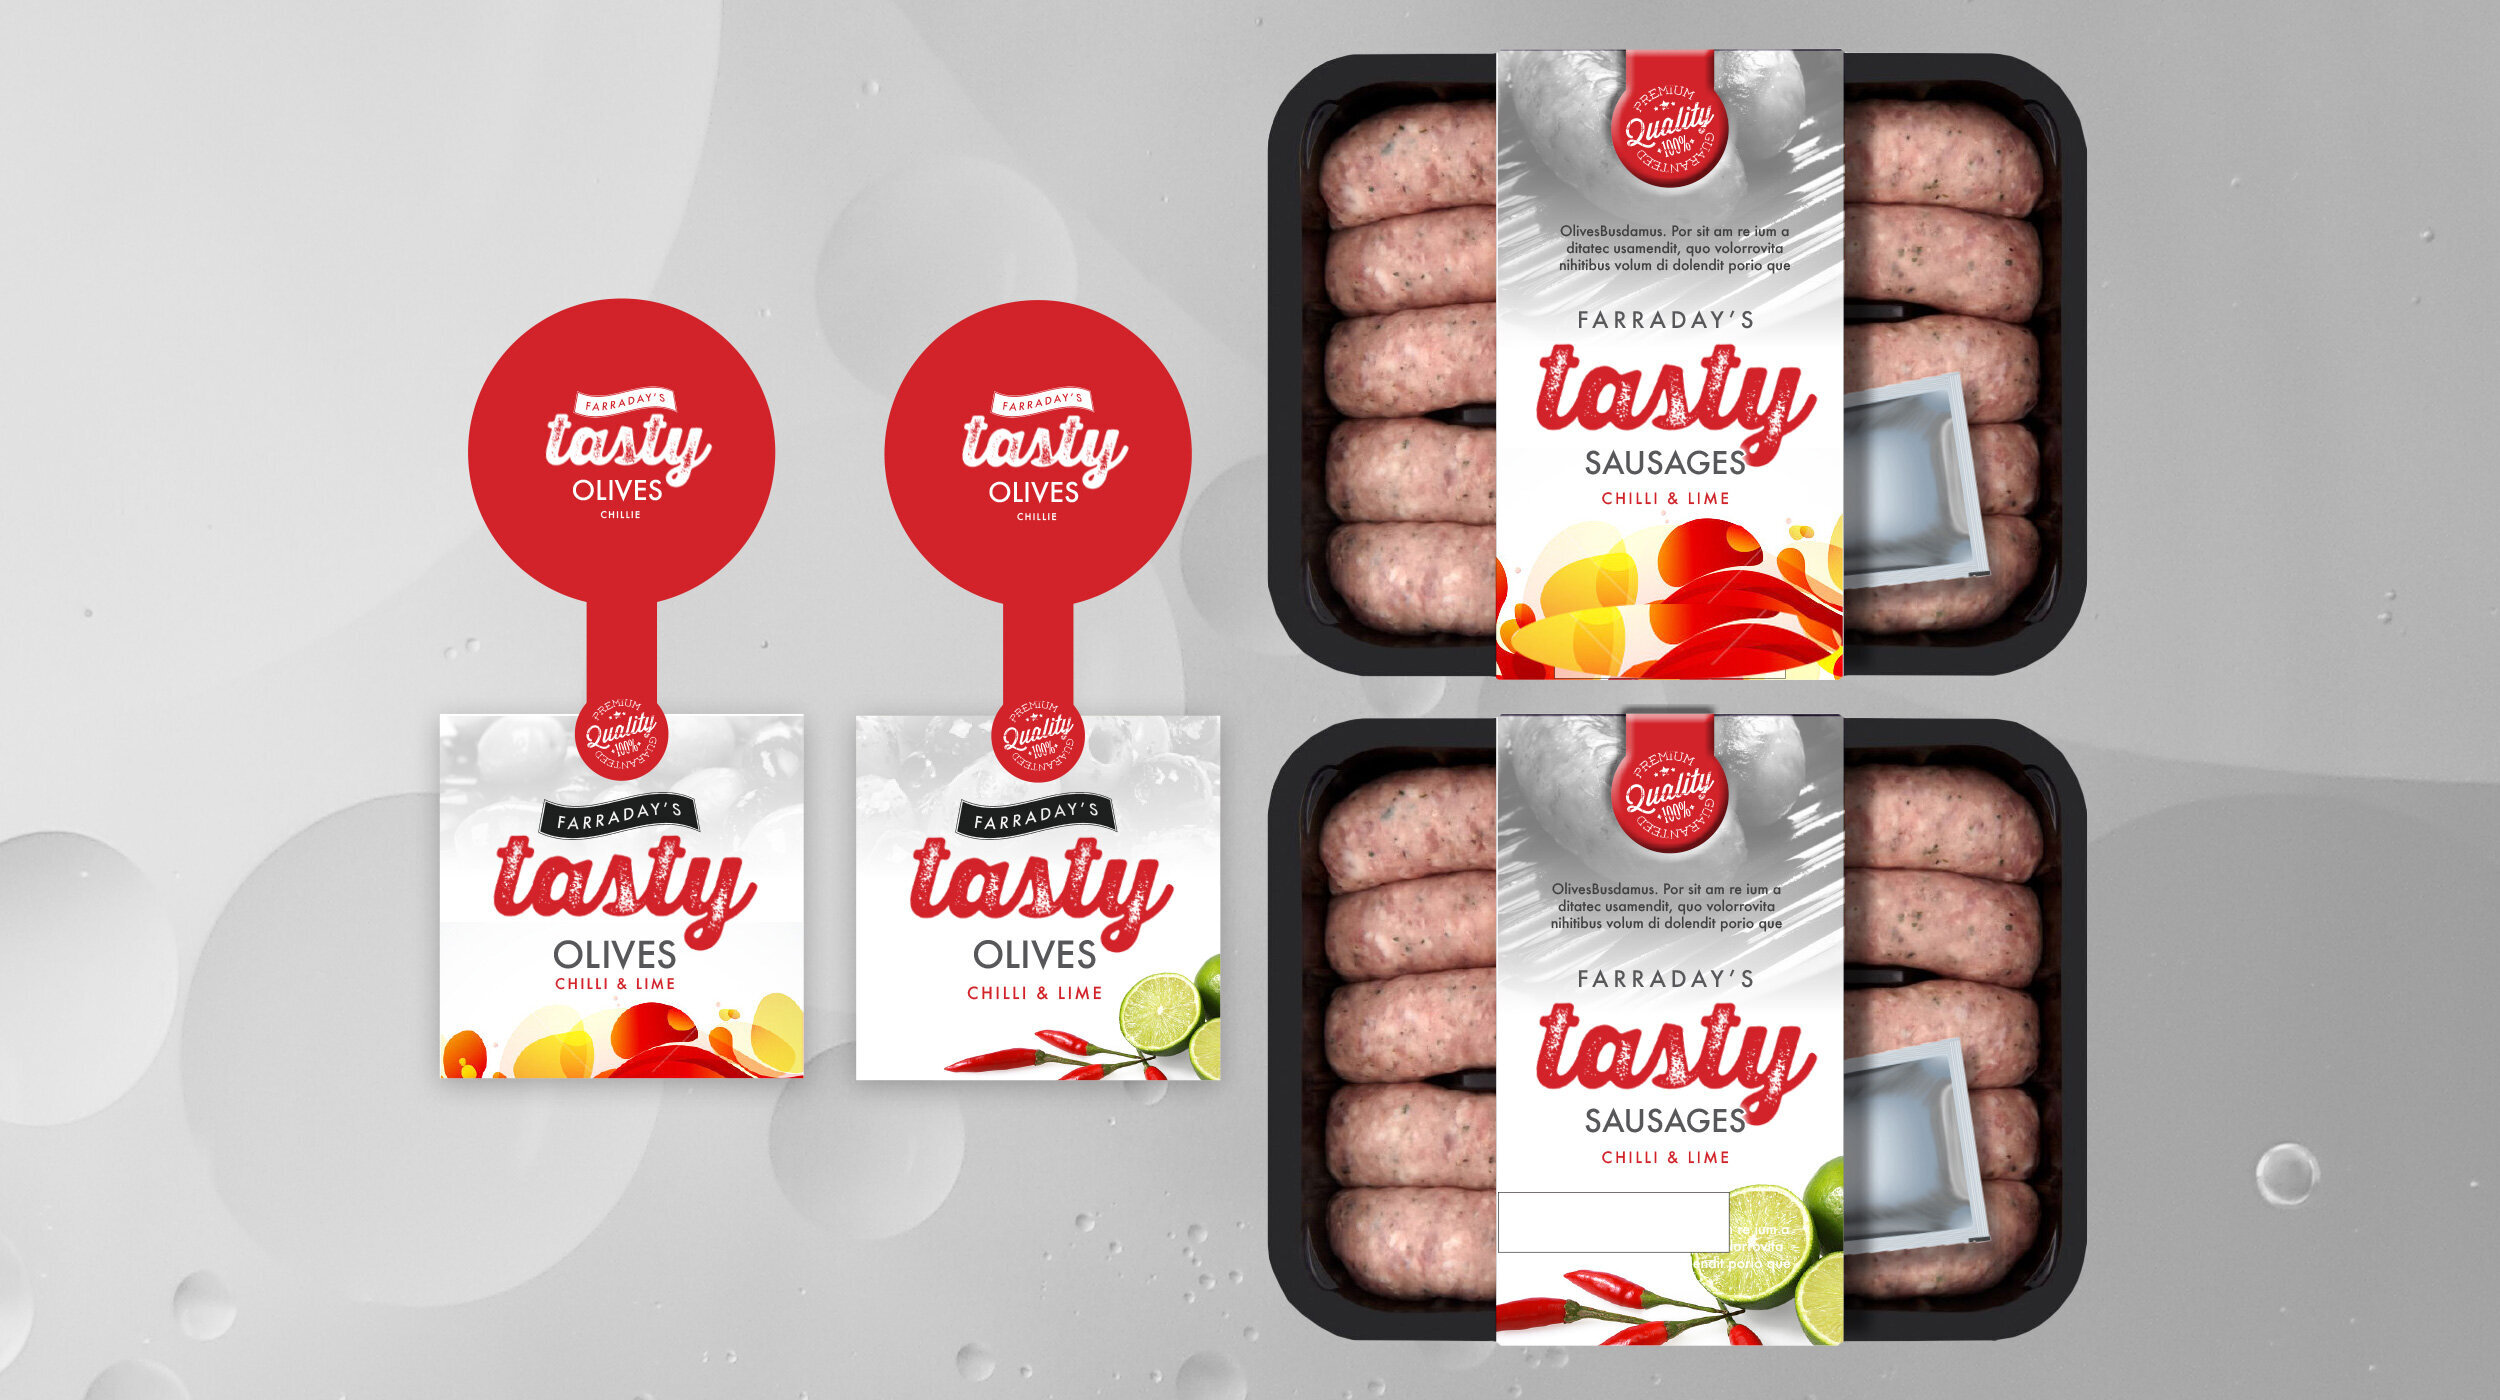 brand-food-packaging-design-farradays-tasty-adam-thorp-1.jpeg